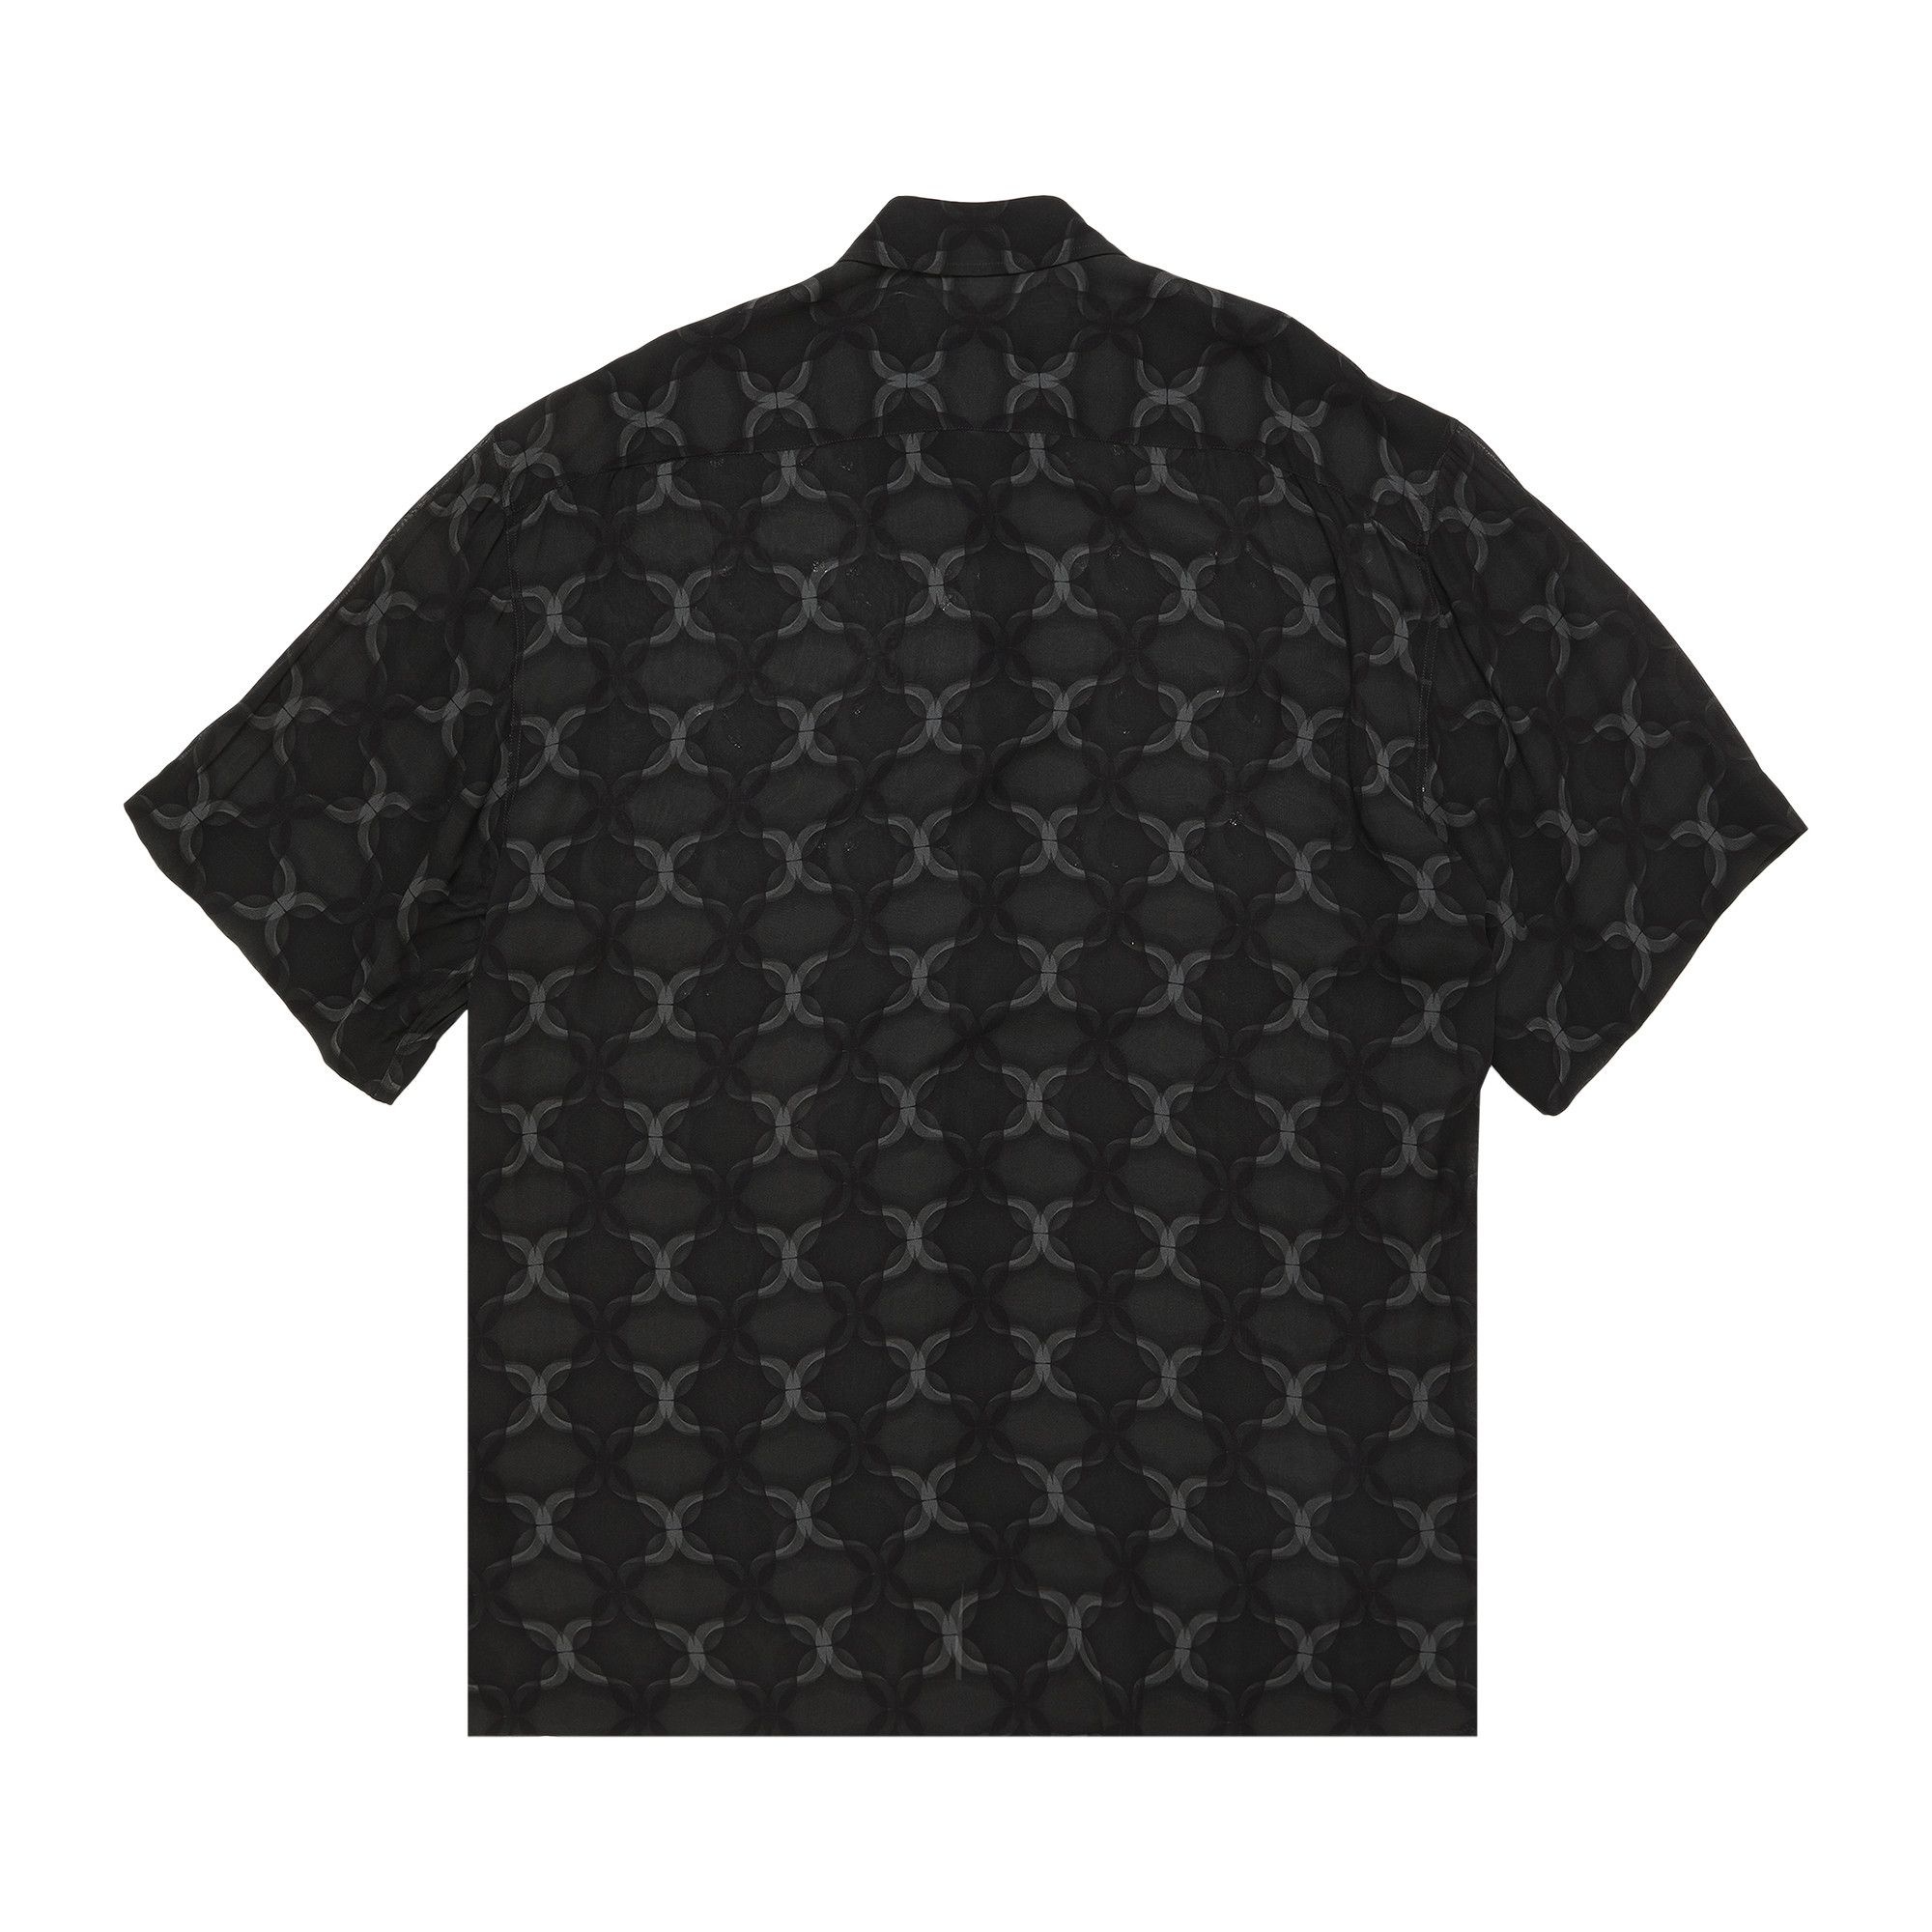 Dries Van Noten Printed Short-Sleeve Shirt 'Anthracite' - 2